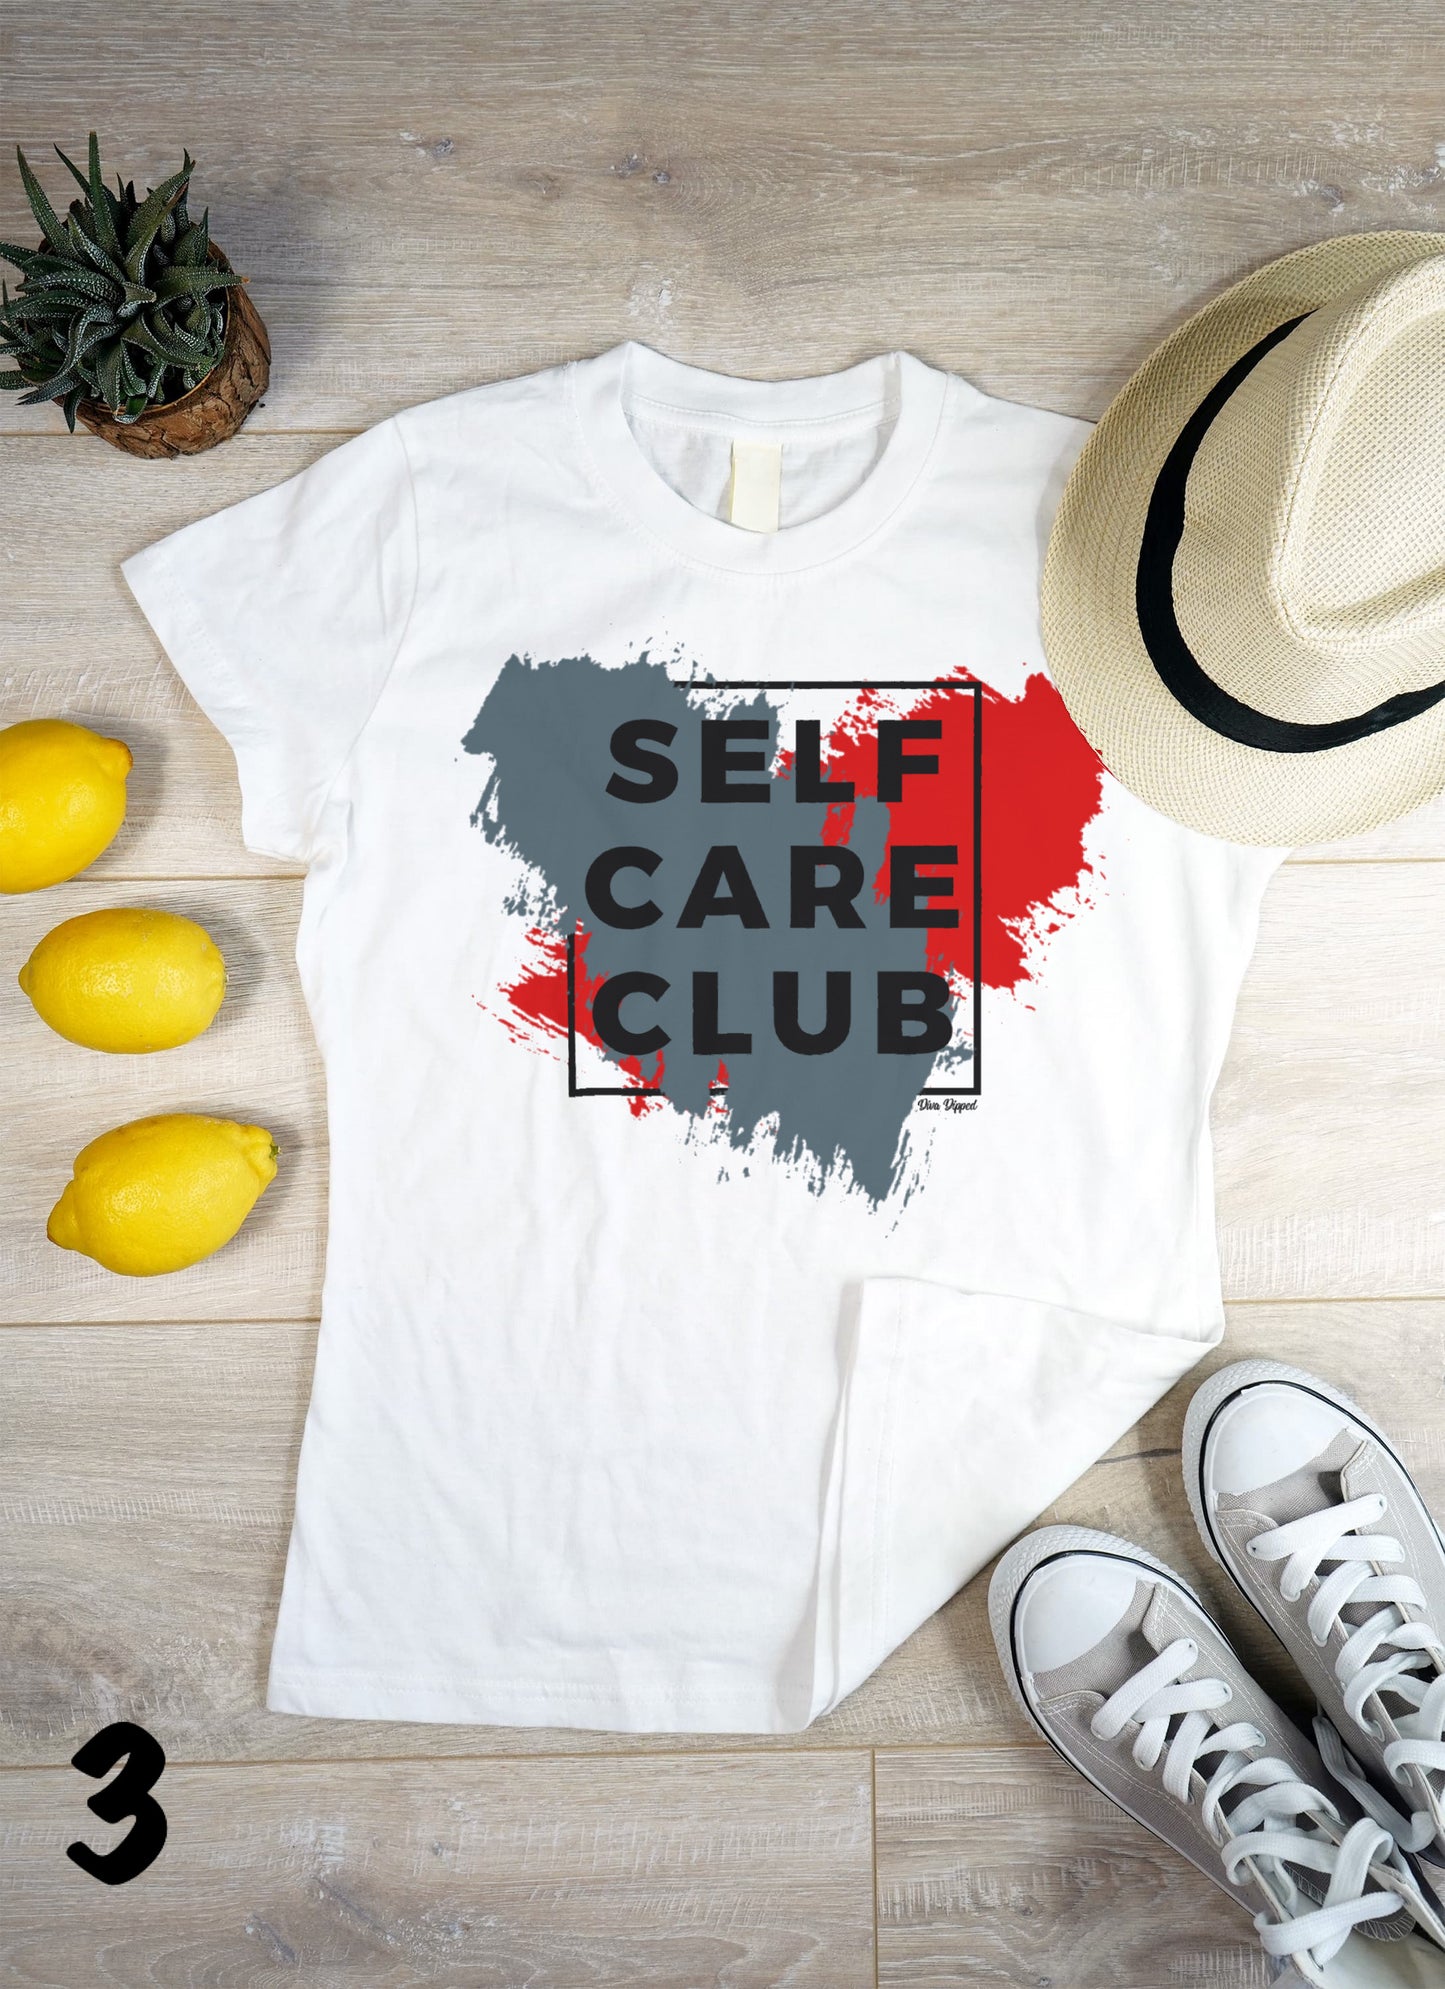 Self Care Club Logo T-Shirt